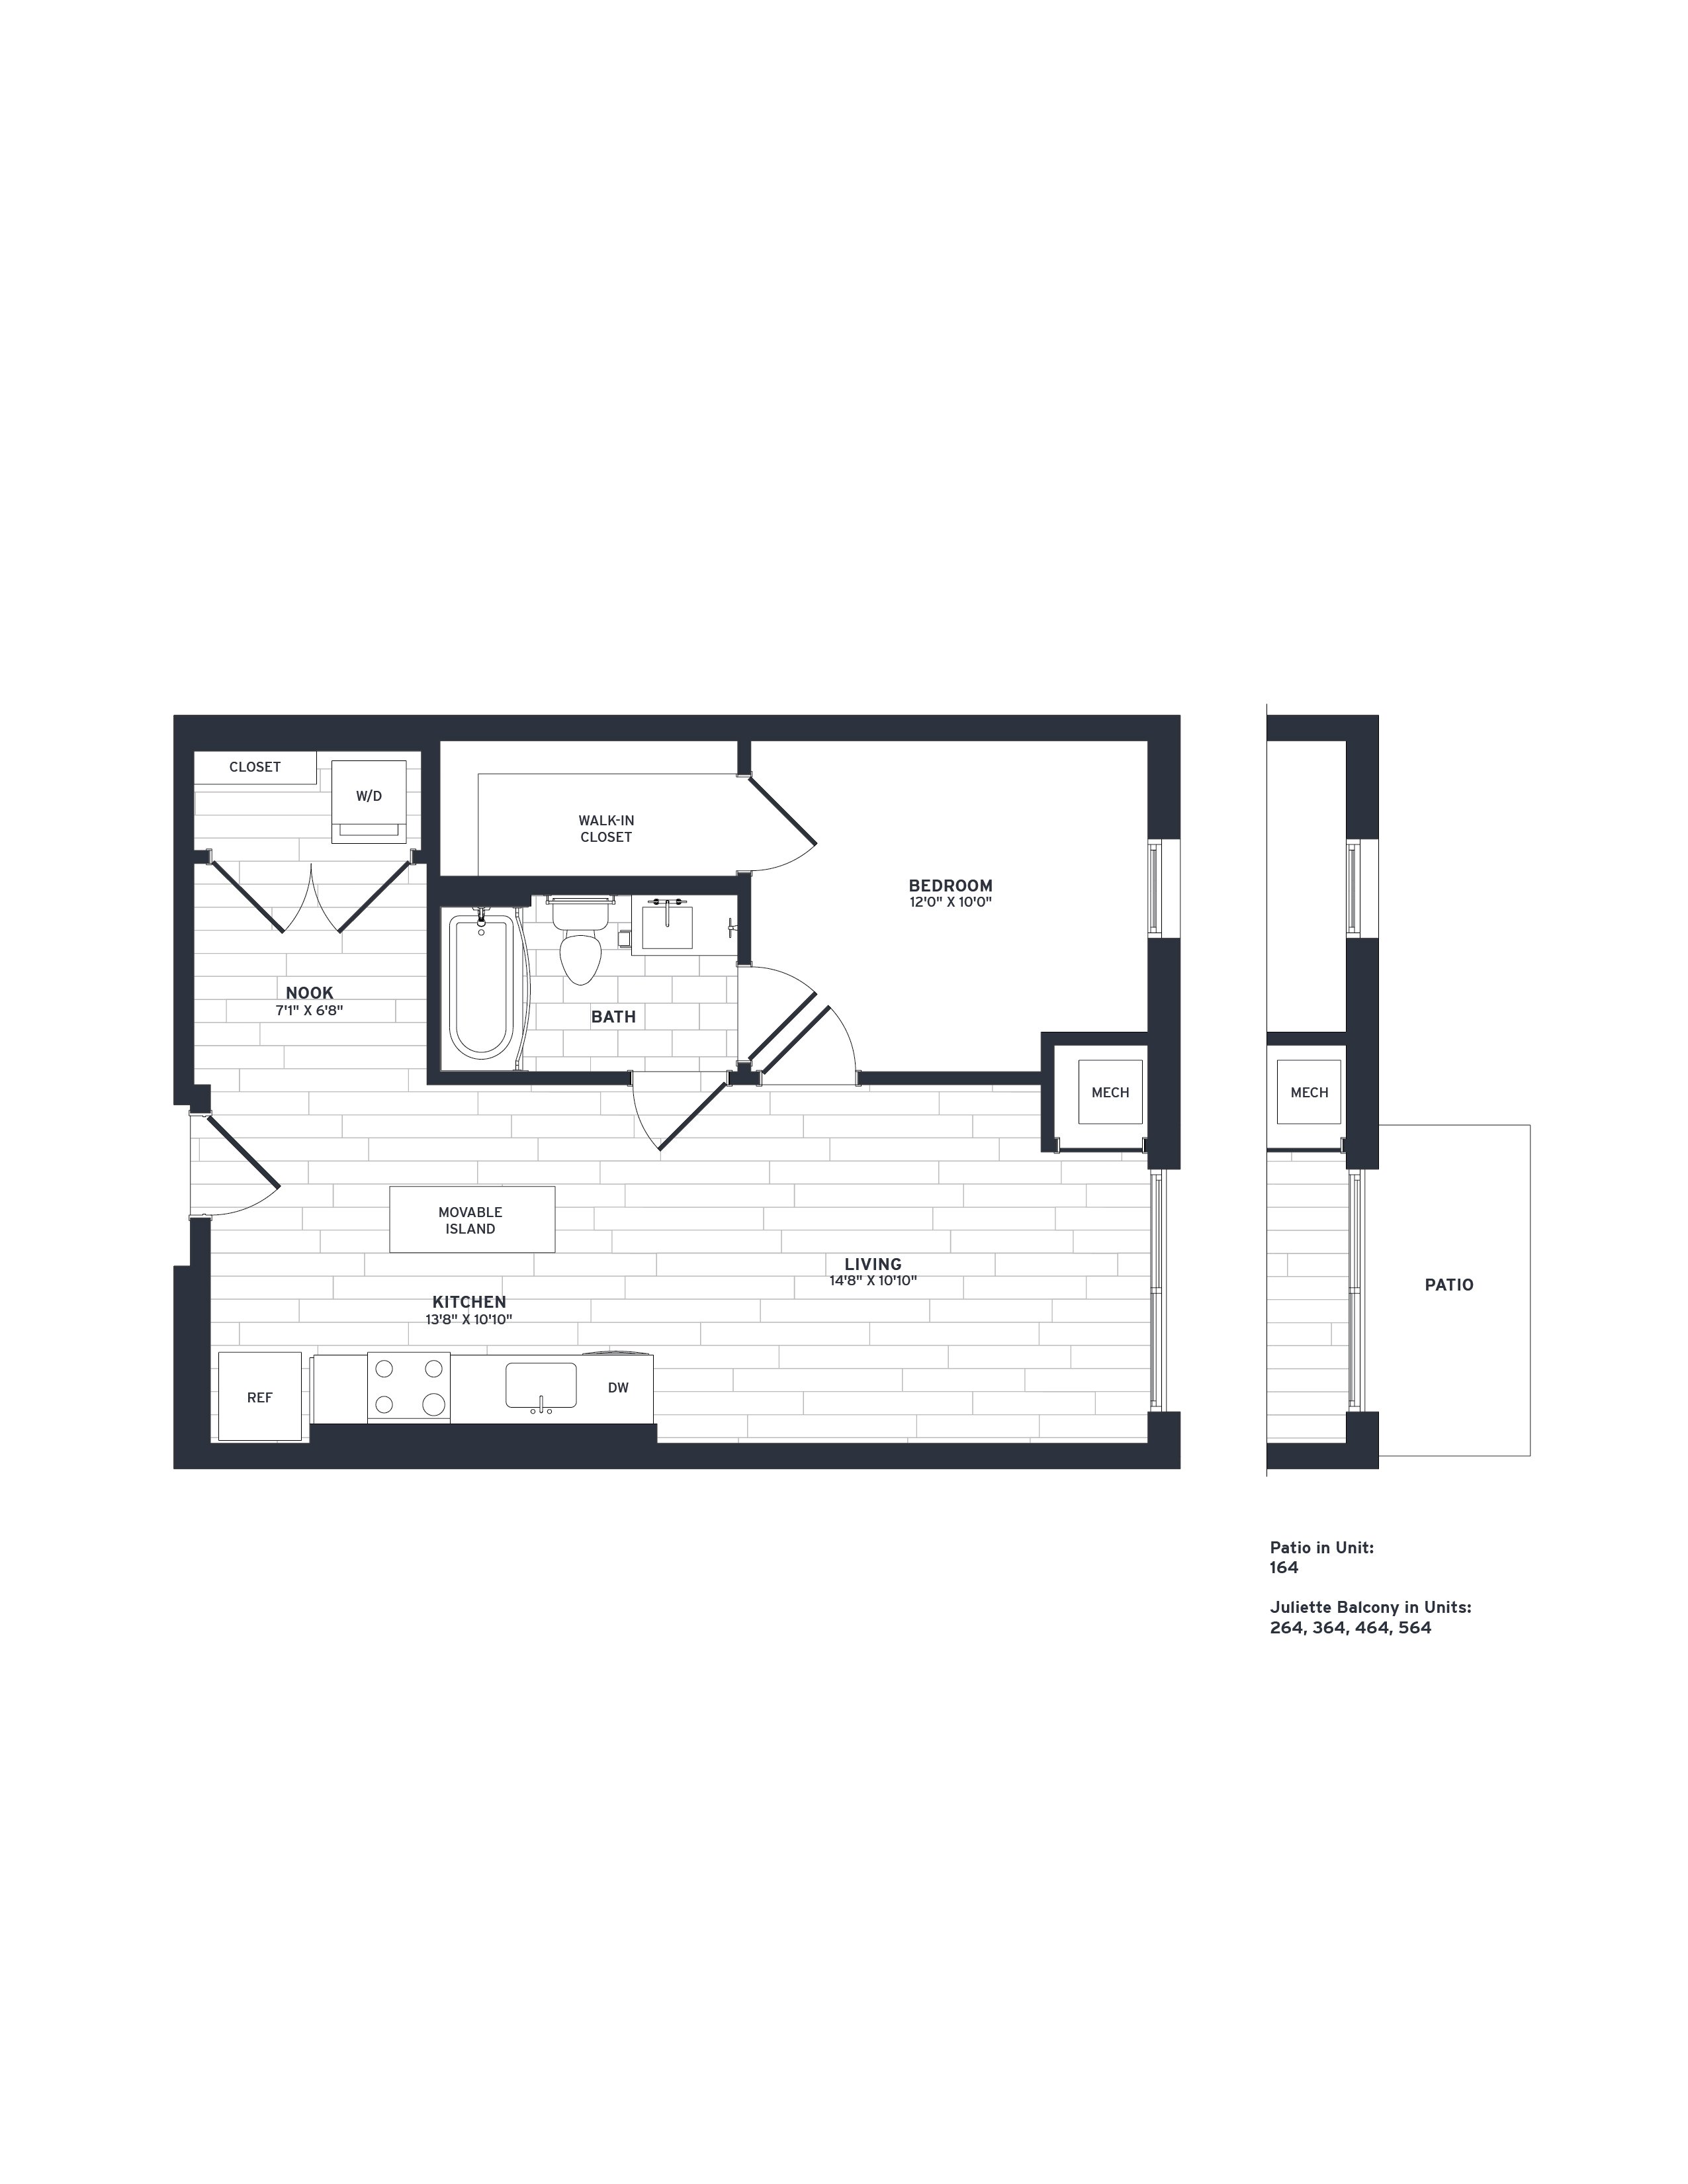 Floor Plan Image of Apartment Apt 264